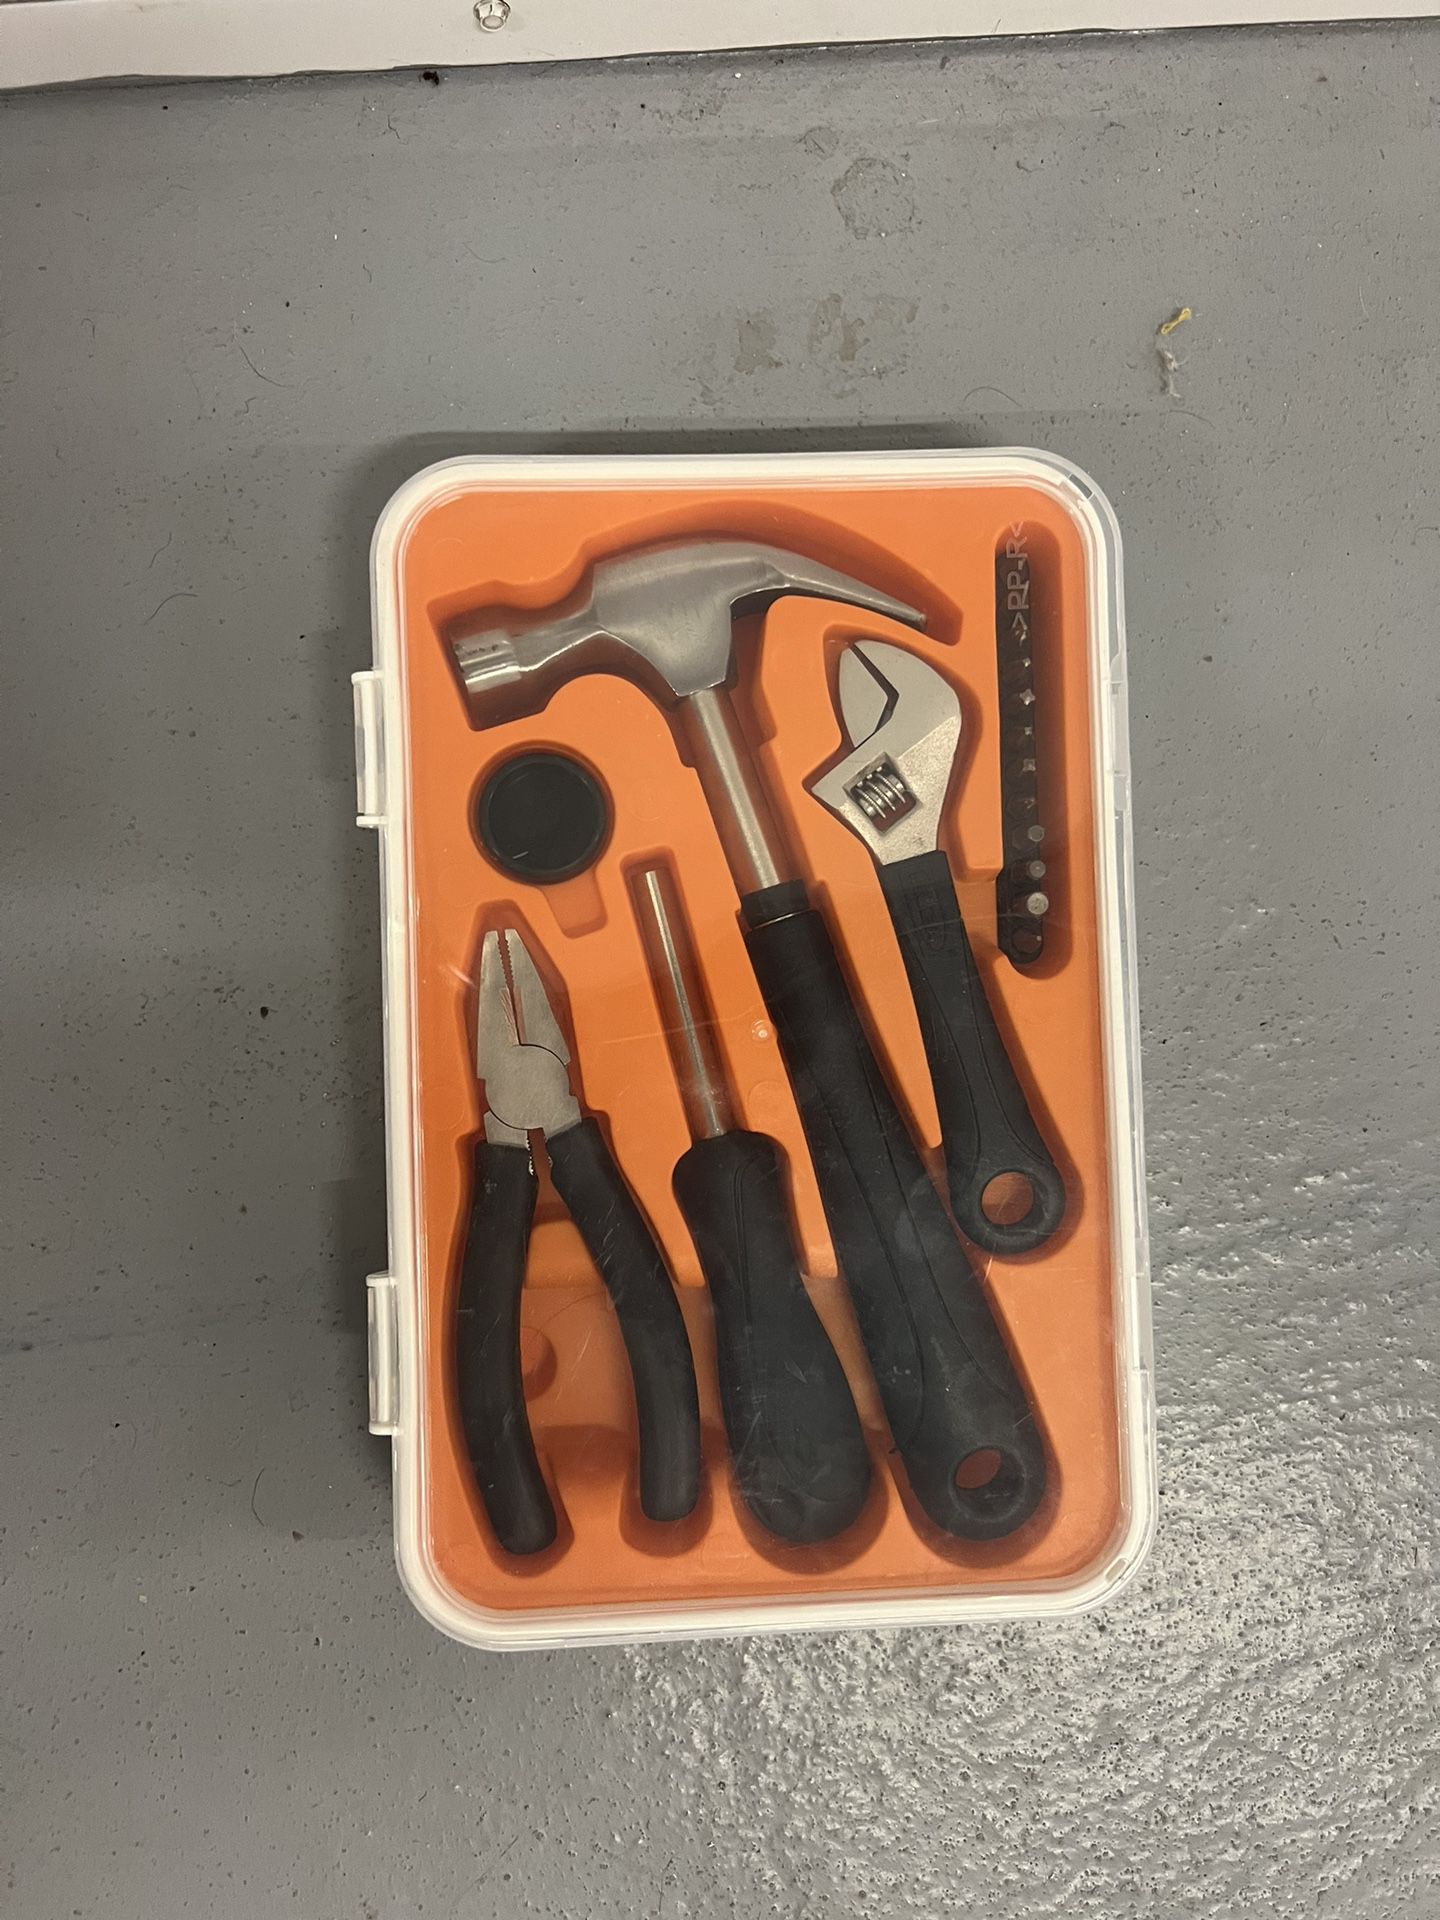 IKEA Tool Kit 